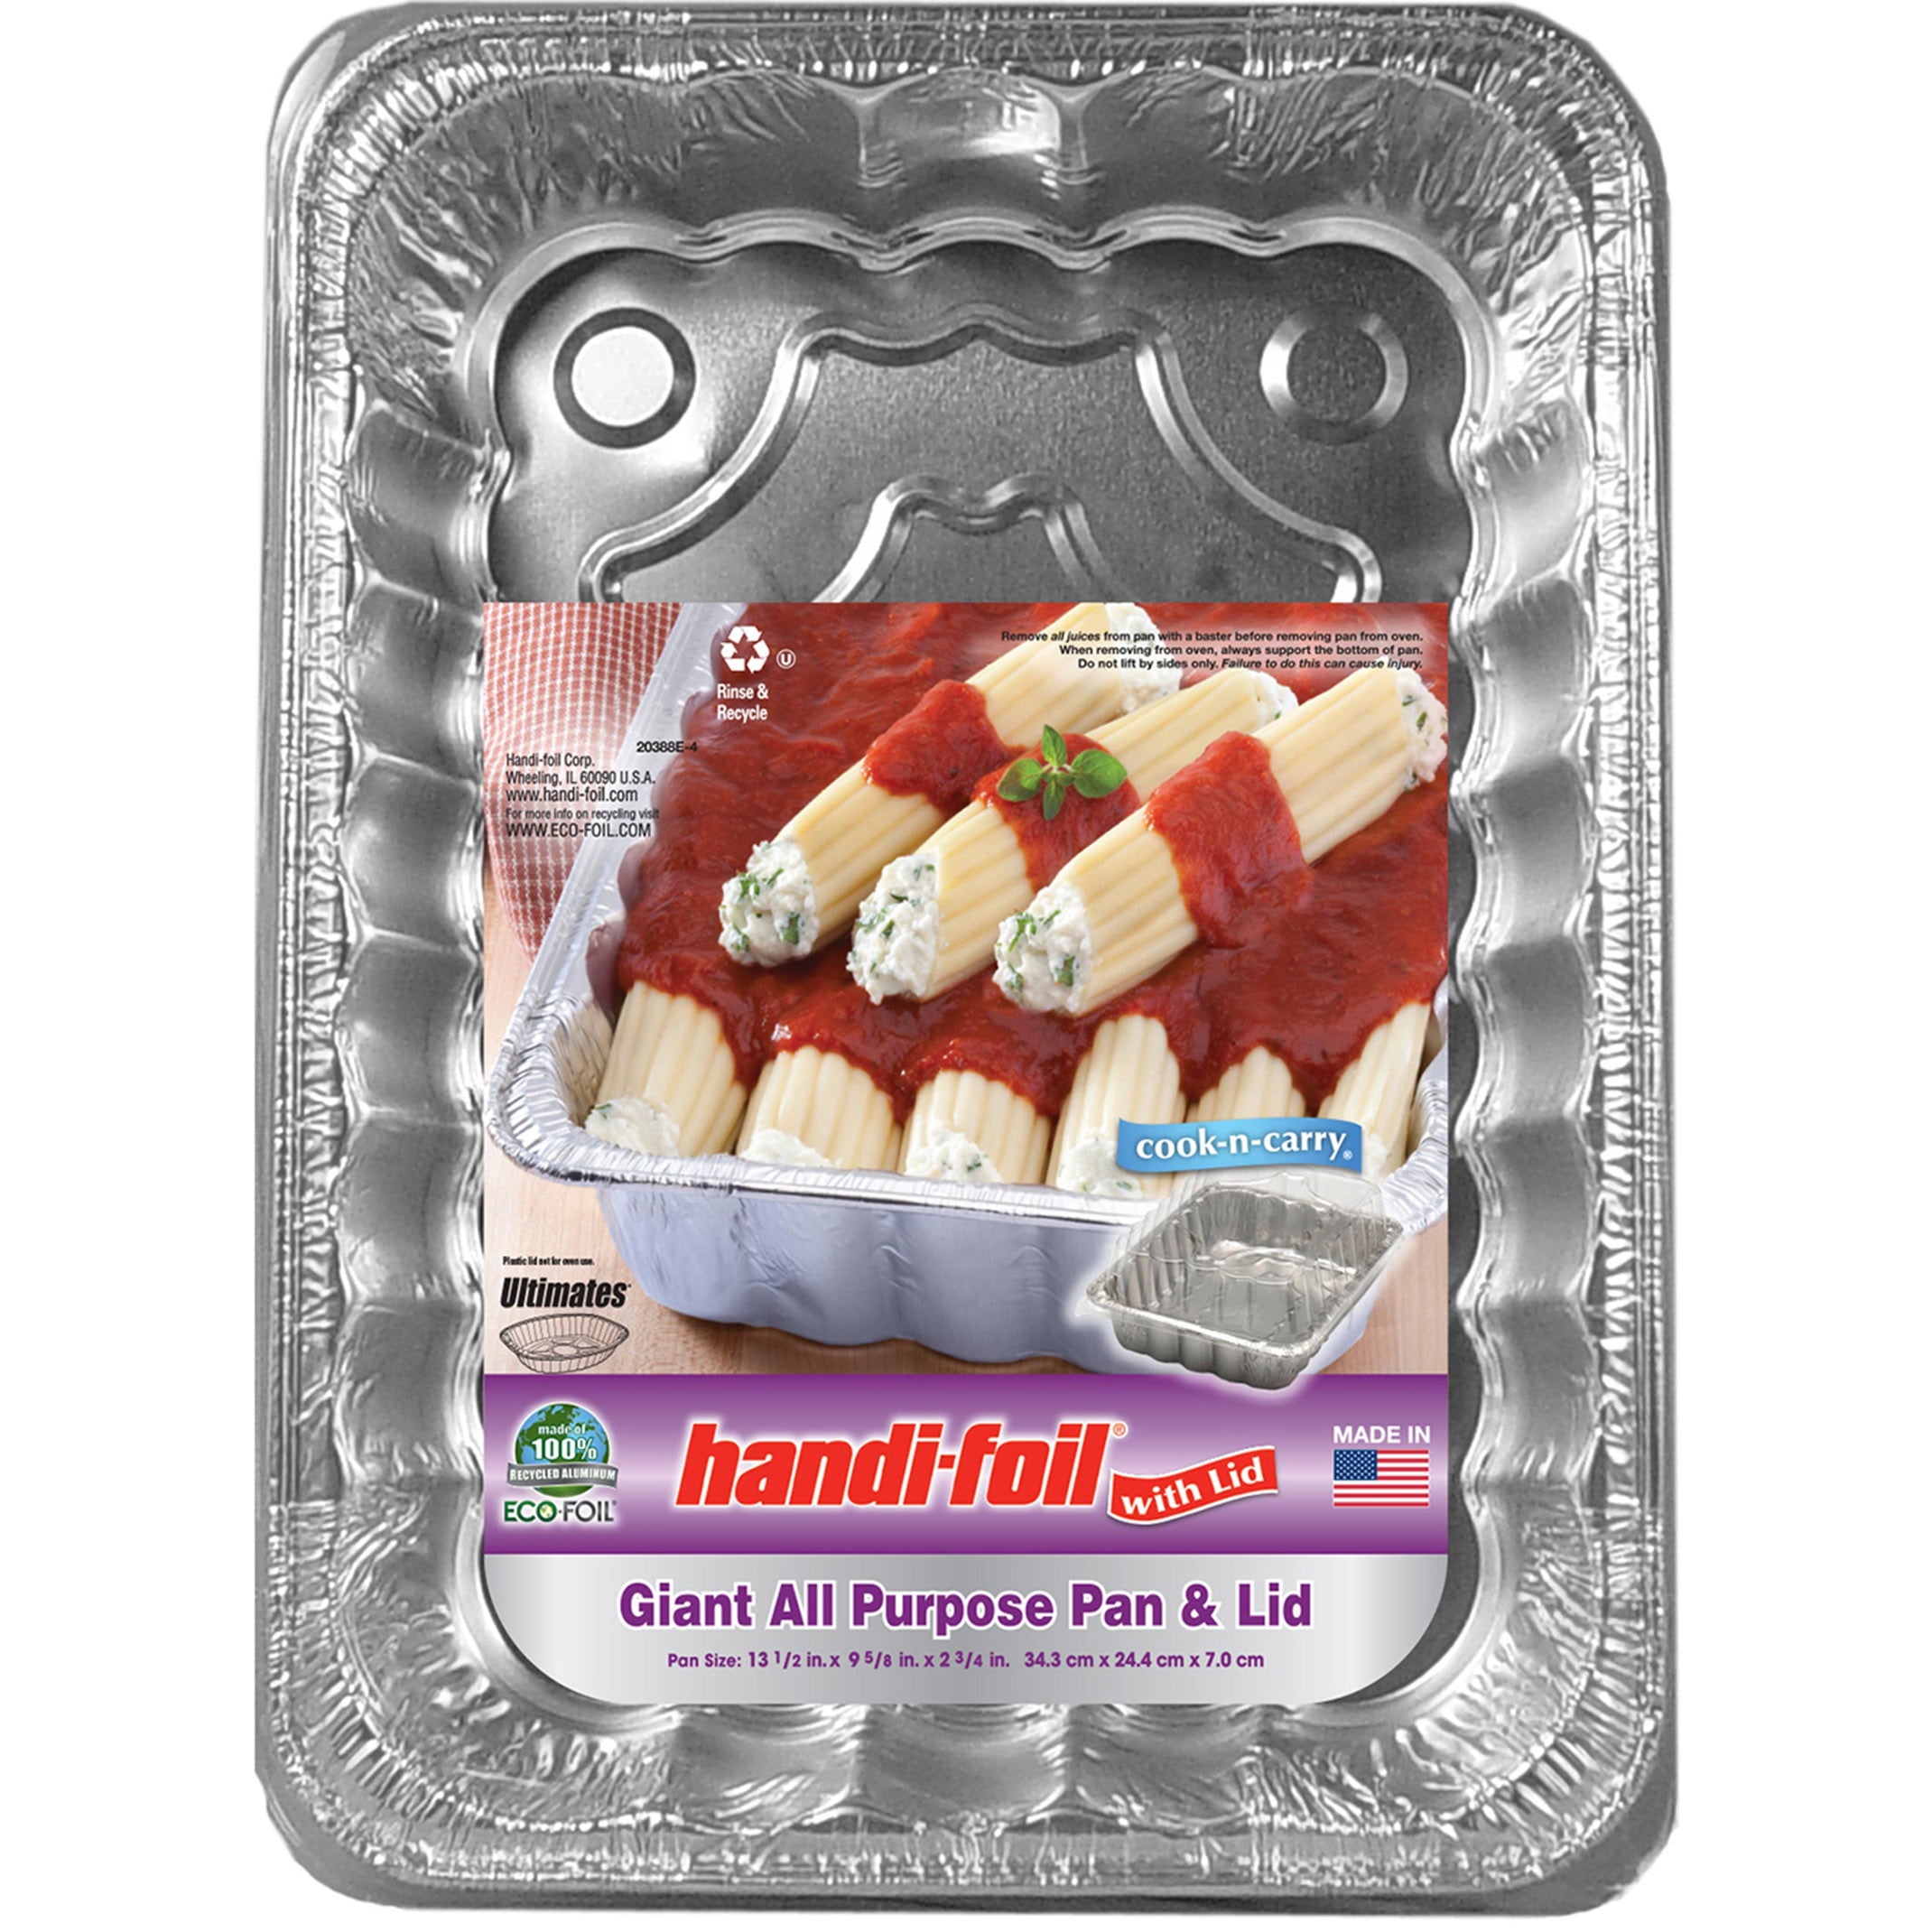 Handi Foil Eco-Foil Cook-N-Carry All Purpose Pan & Lid, Giant